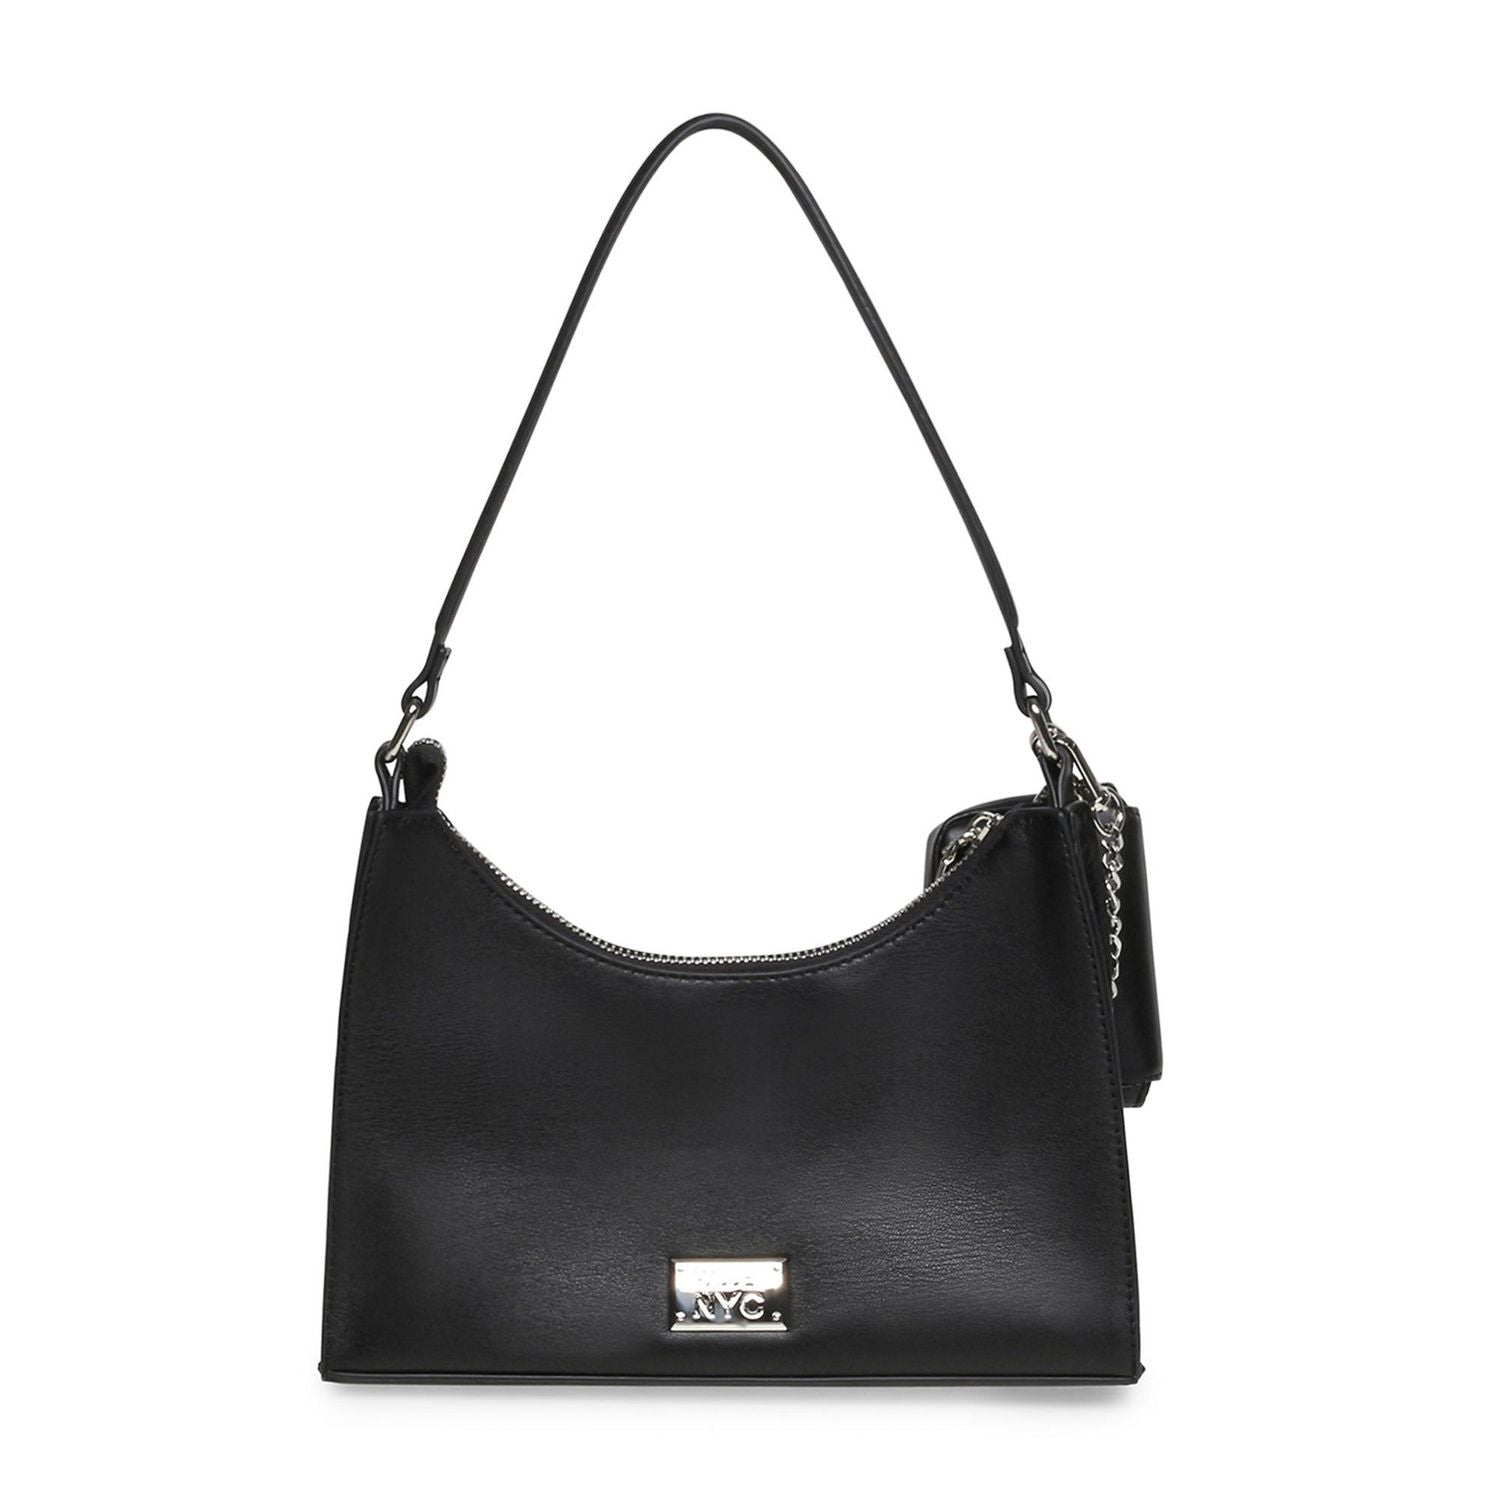 black shoulder bag | Bags, Black shoulder bag, Shoulder bag